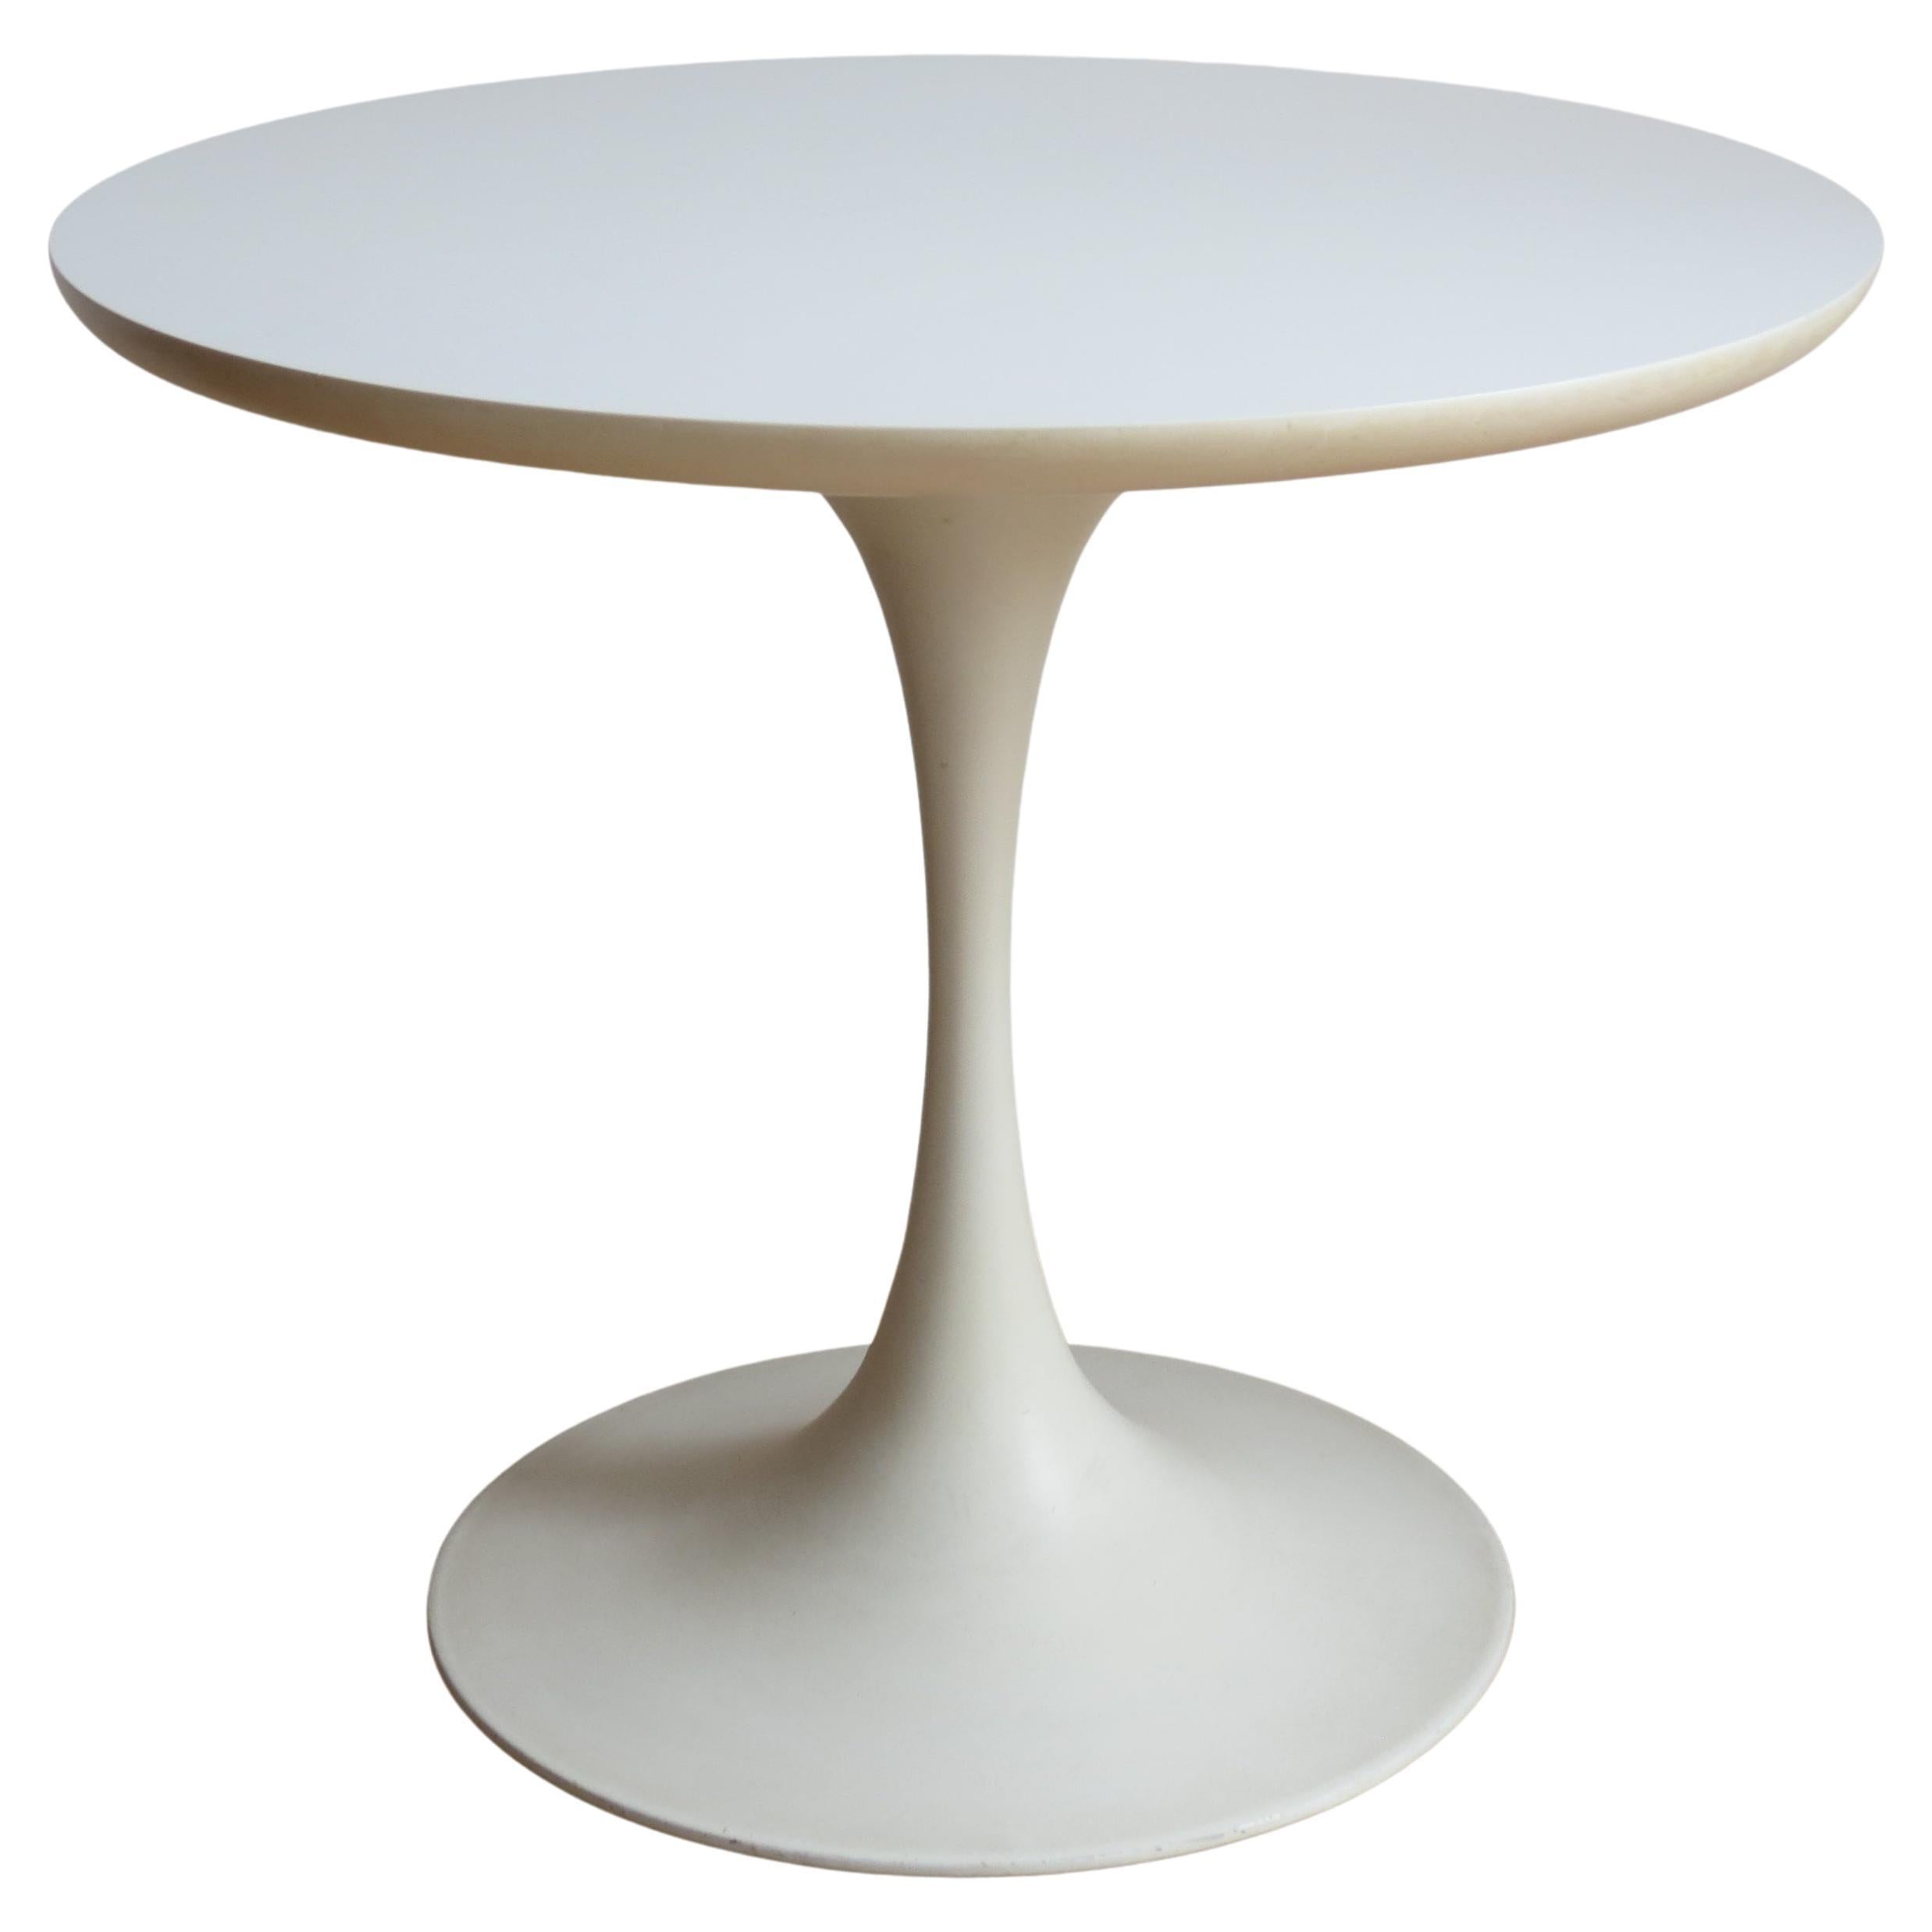 1960s White Tulip Side Table Designed by Maurice Burke for Arkana, Bath, UK